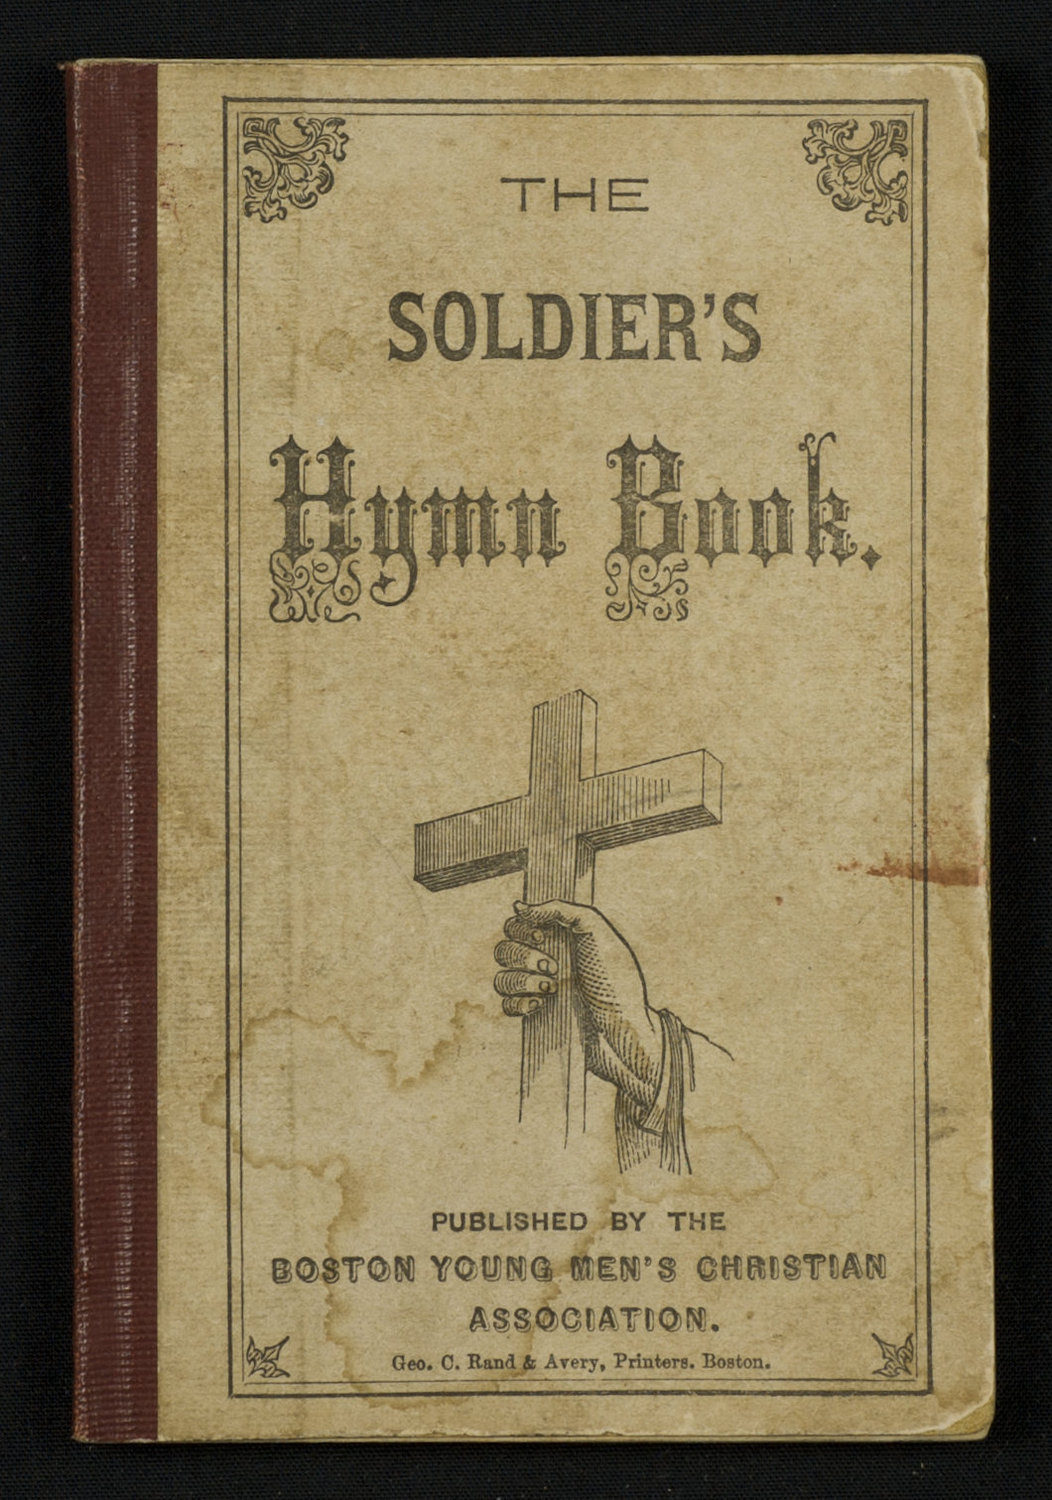 Hymn book cover